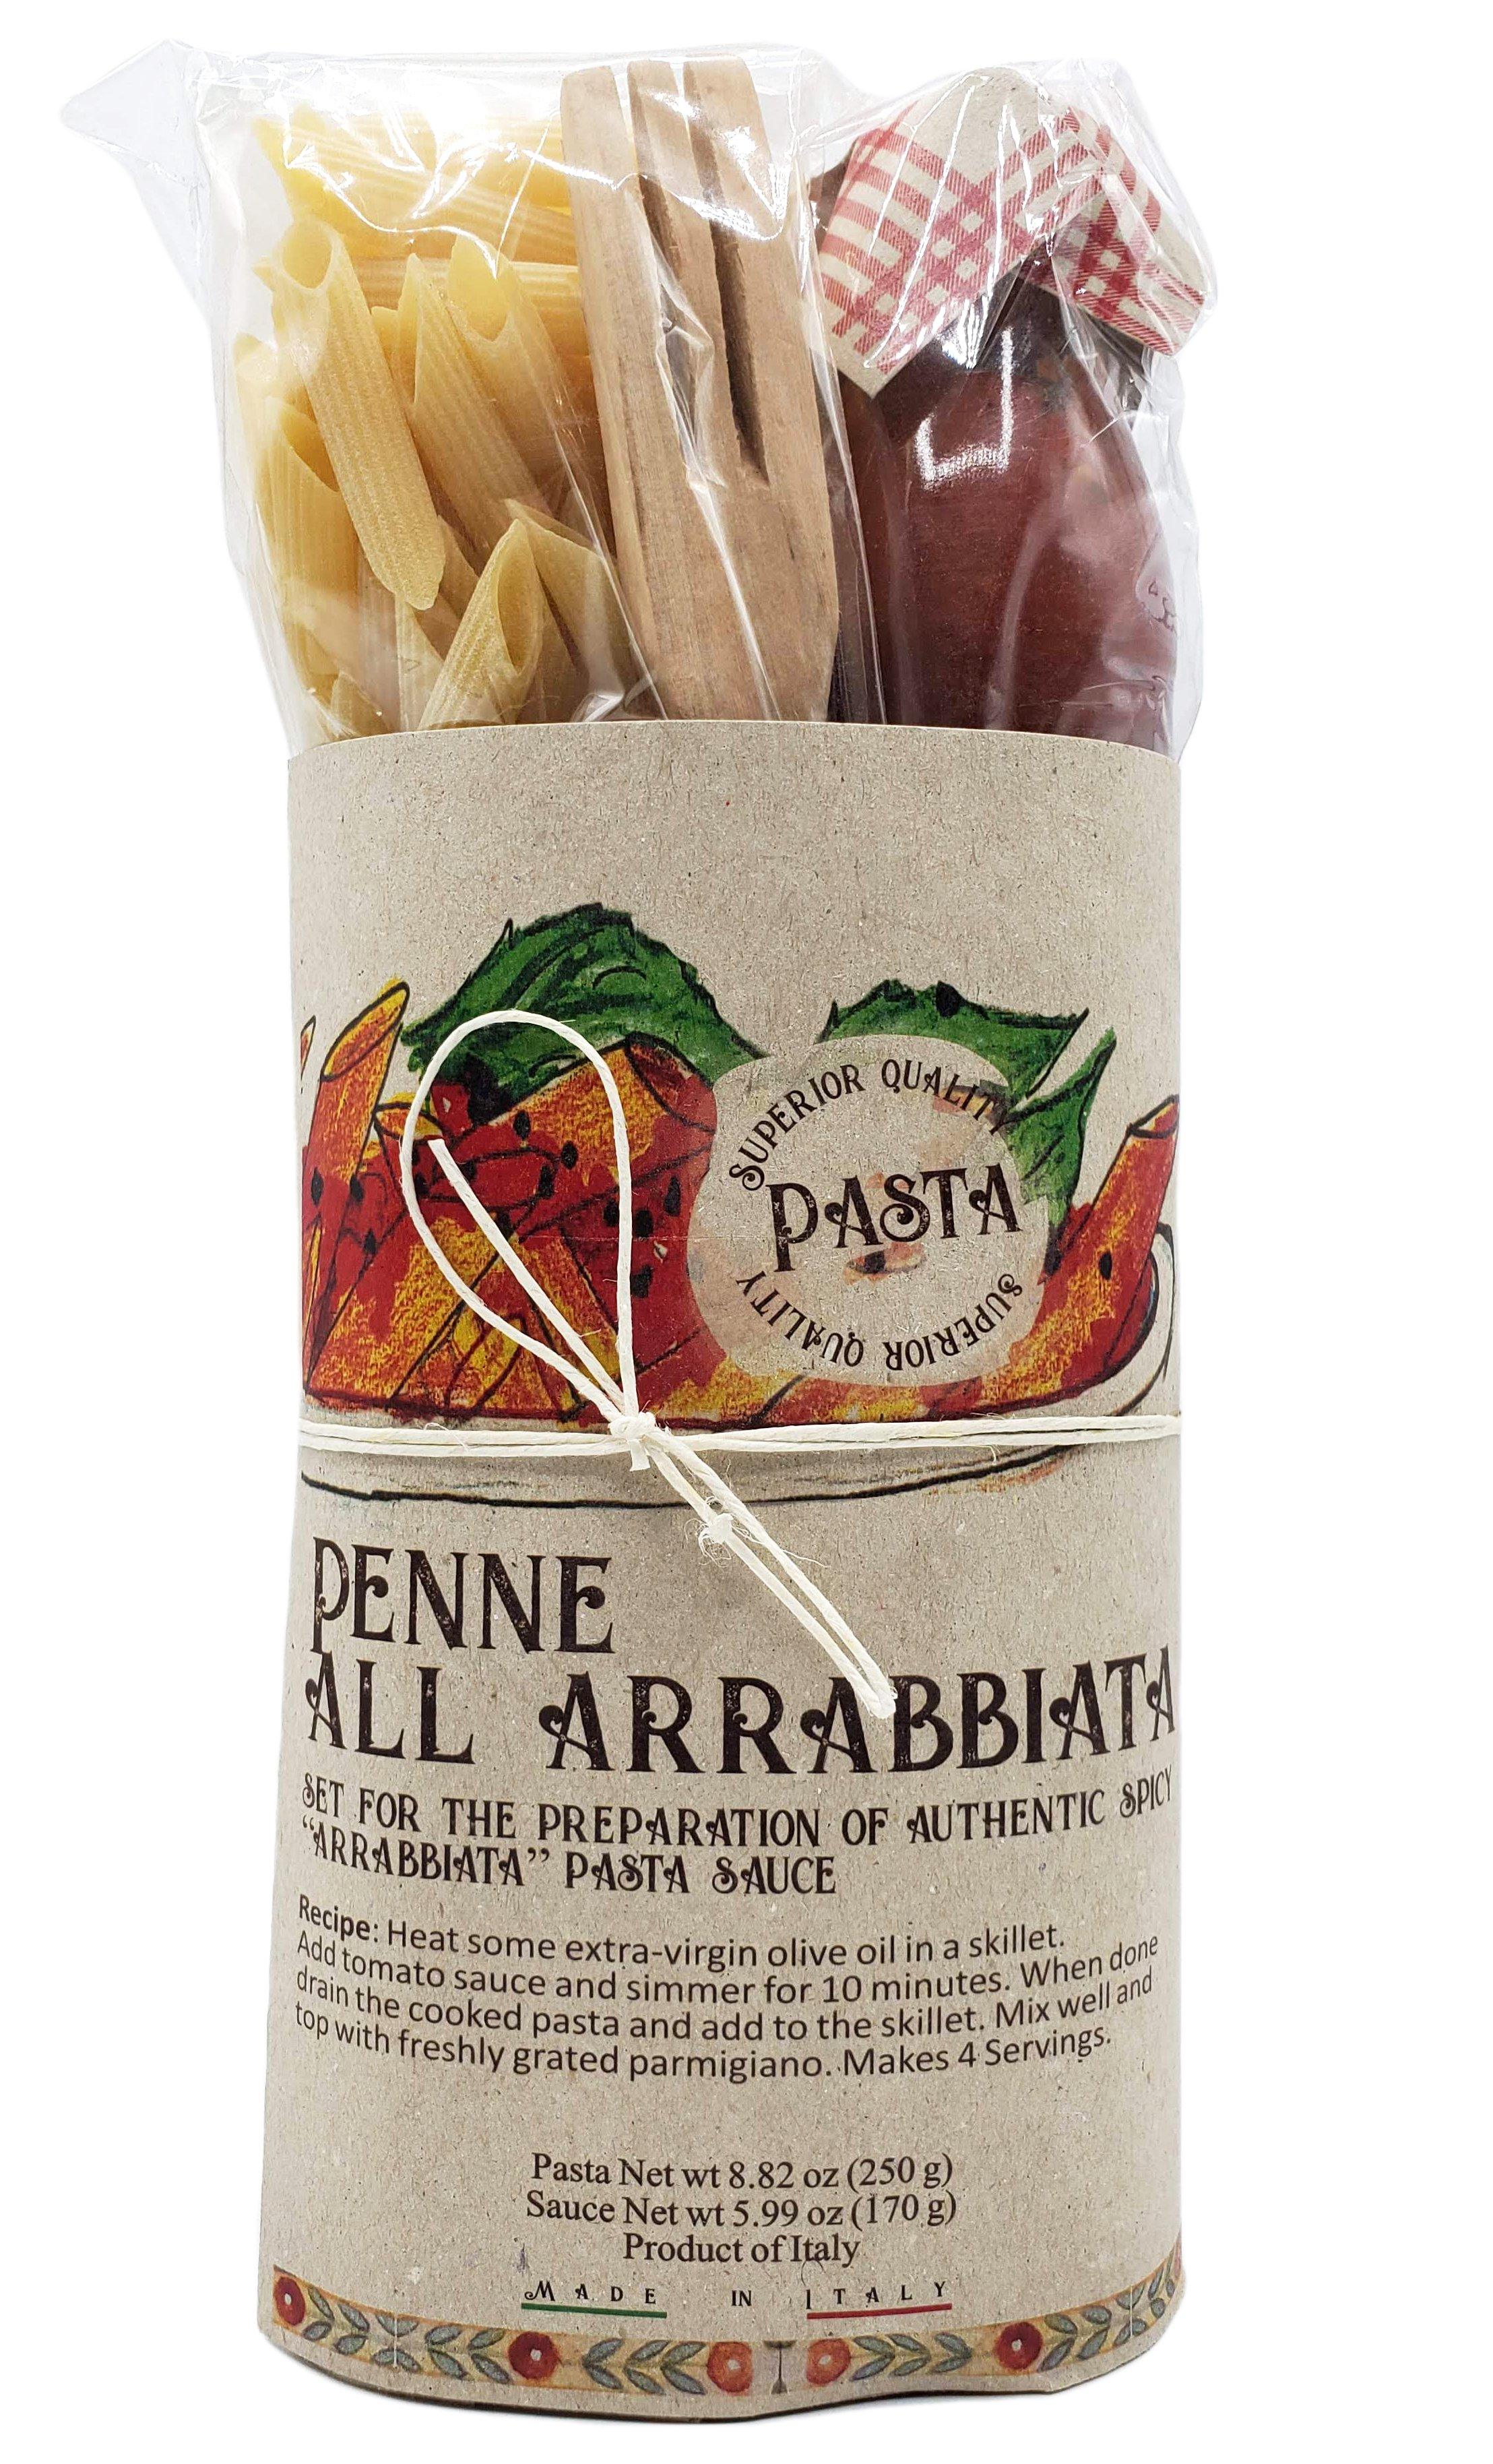 Casarecci Penne Pasta with Arrabbiata Sauce and Wooden Fork Kit